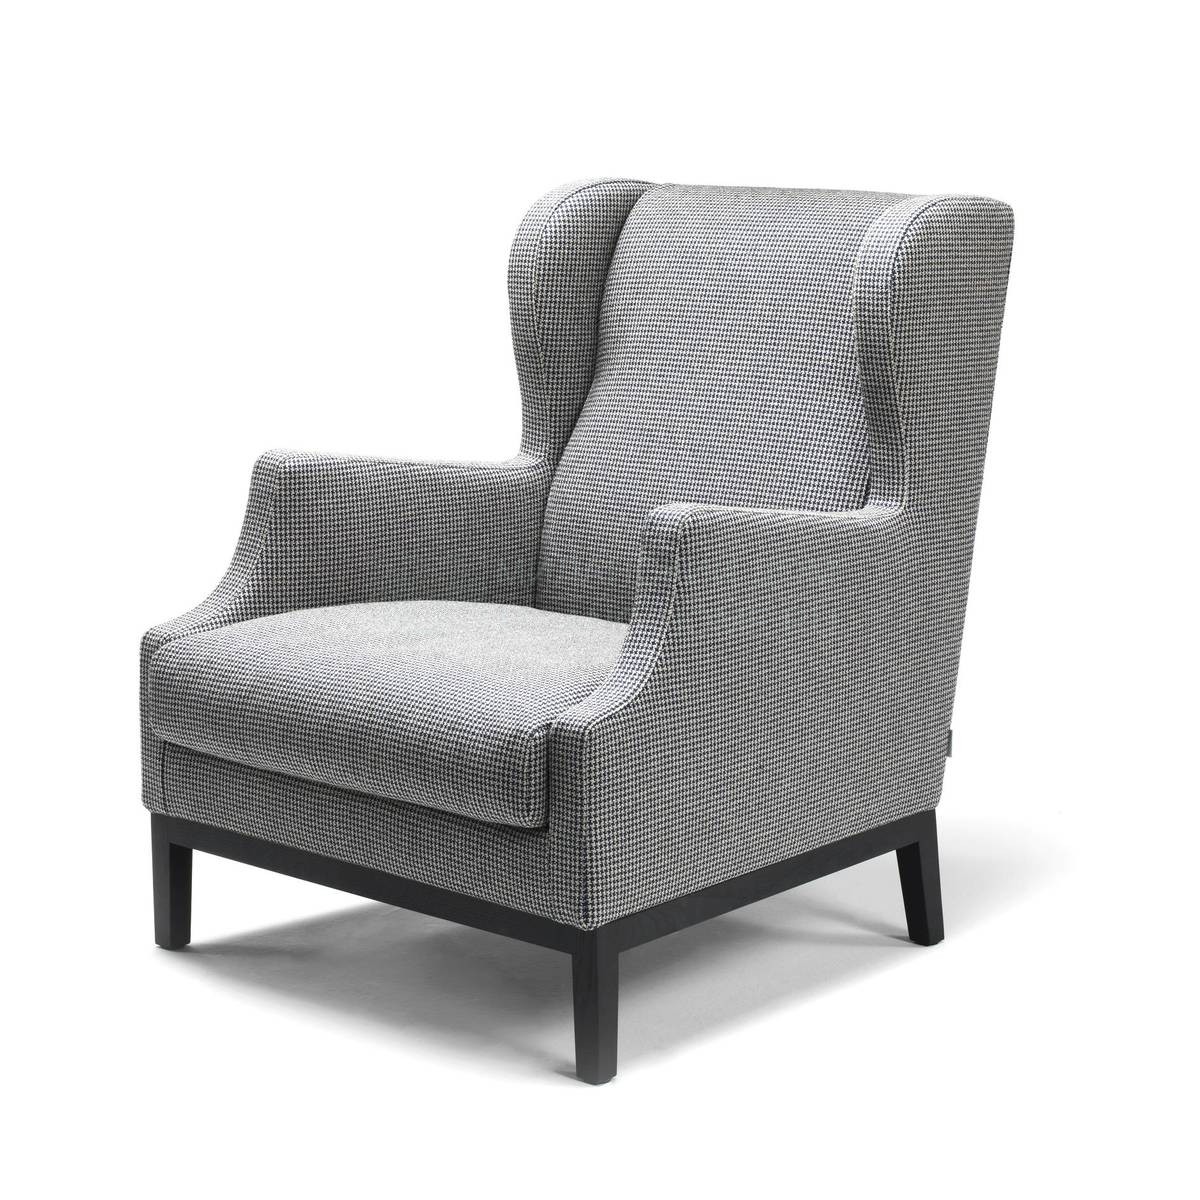 Каминное кресло Chauffeuse armchair из Италии фабрики LIVING DIVANI